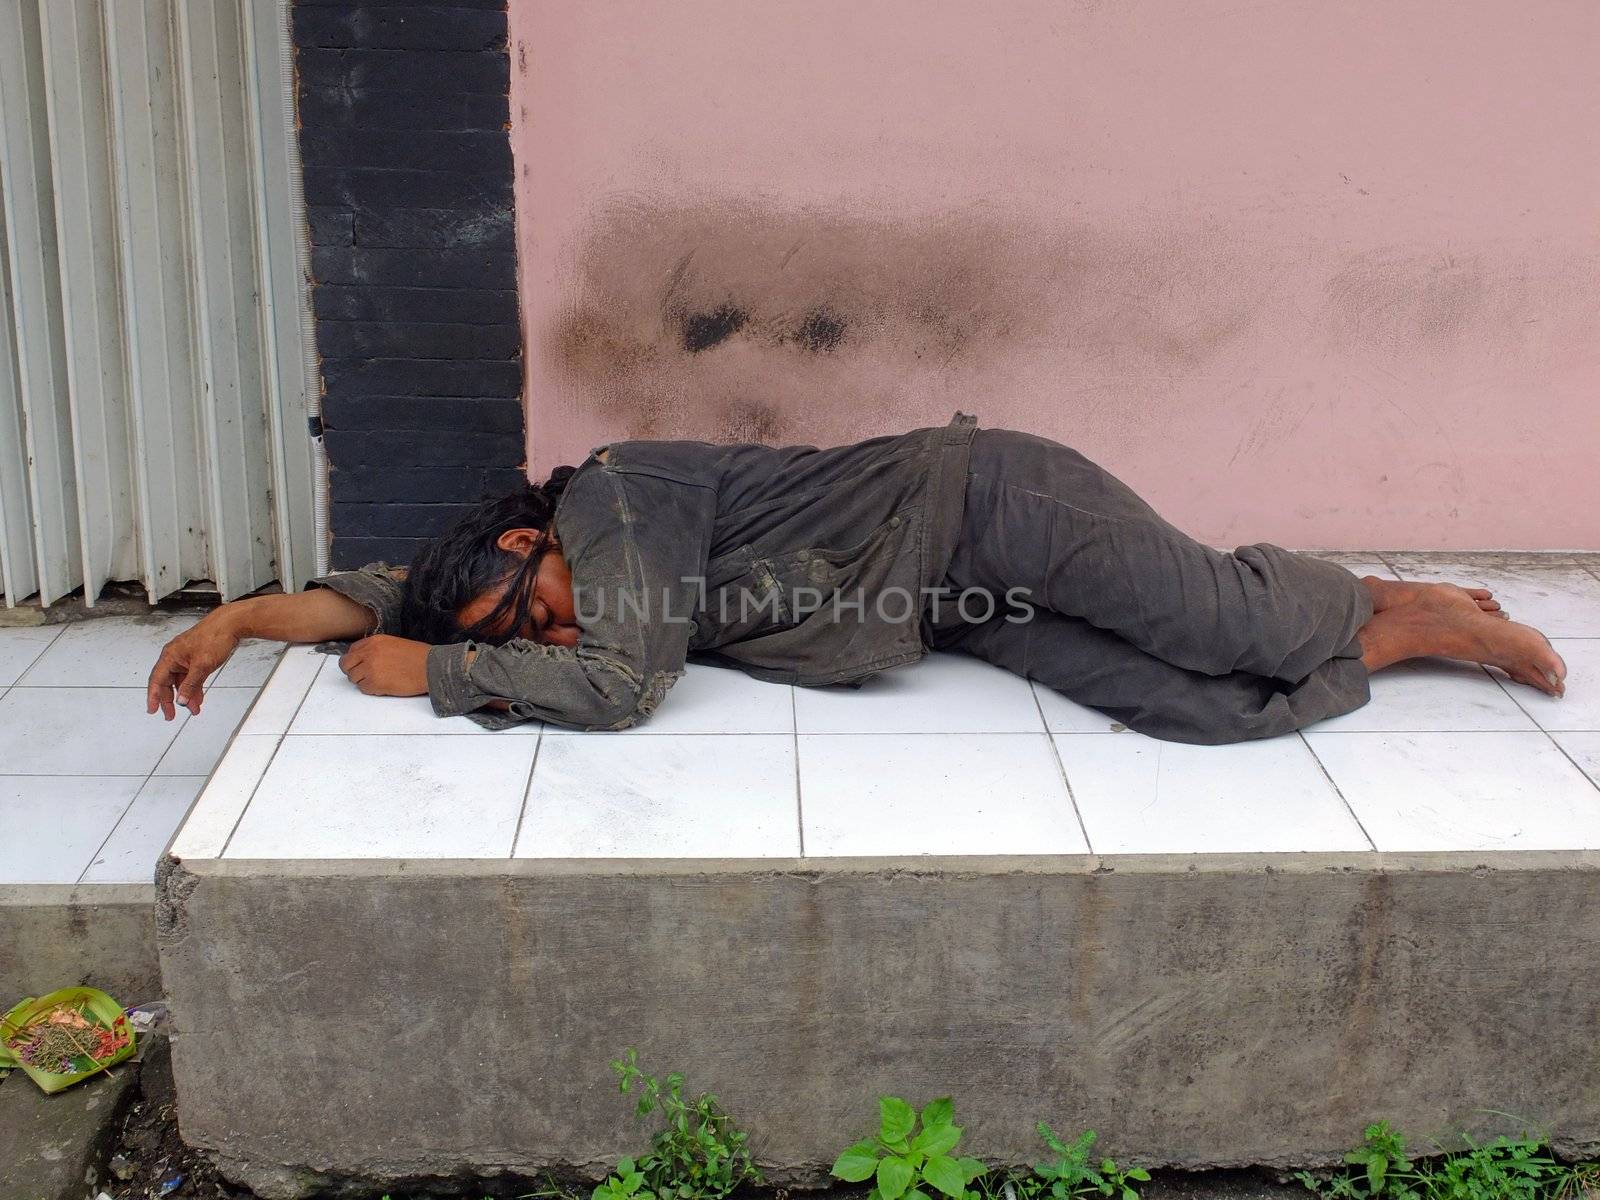 Homeless man sleeping on sidewalk, Bali, Indonesia.